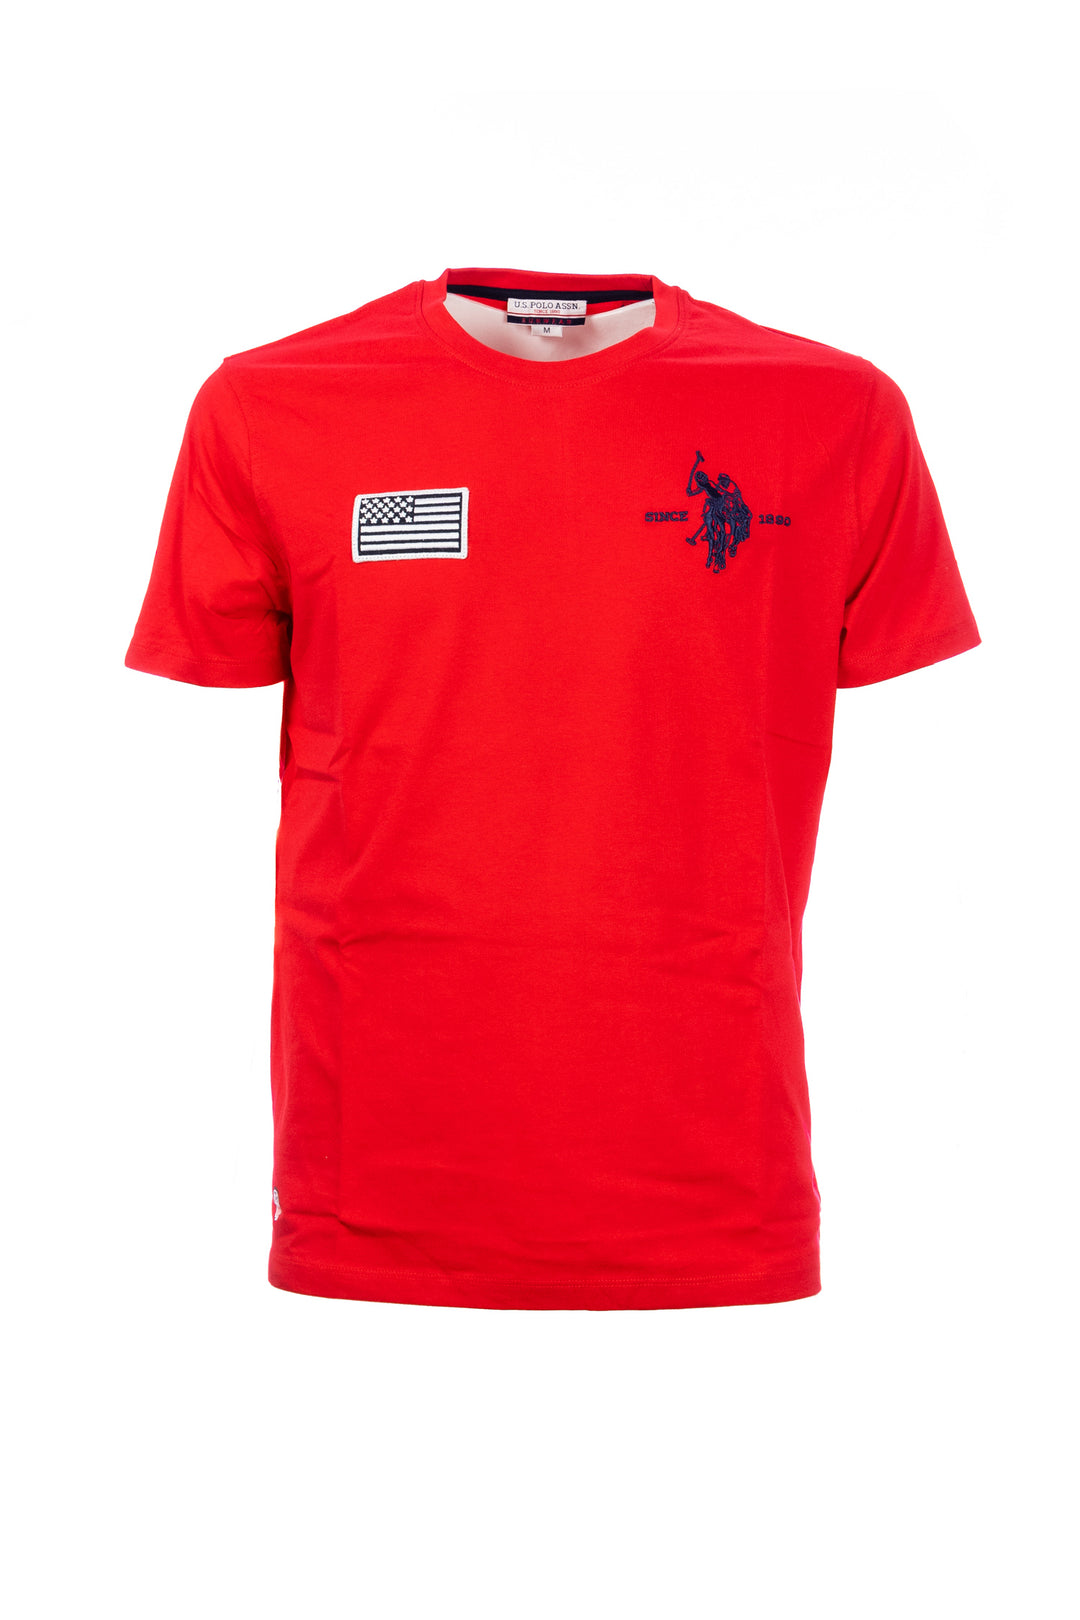 U.S. POLO ASSN. BEACHWEAR T-shirt rossa in cotone con logo e bandiera USA ricamati - Mancinelli 1954